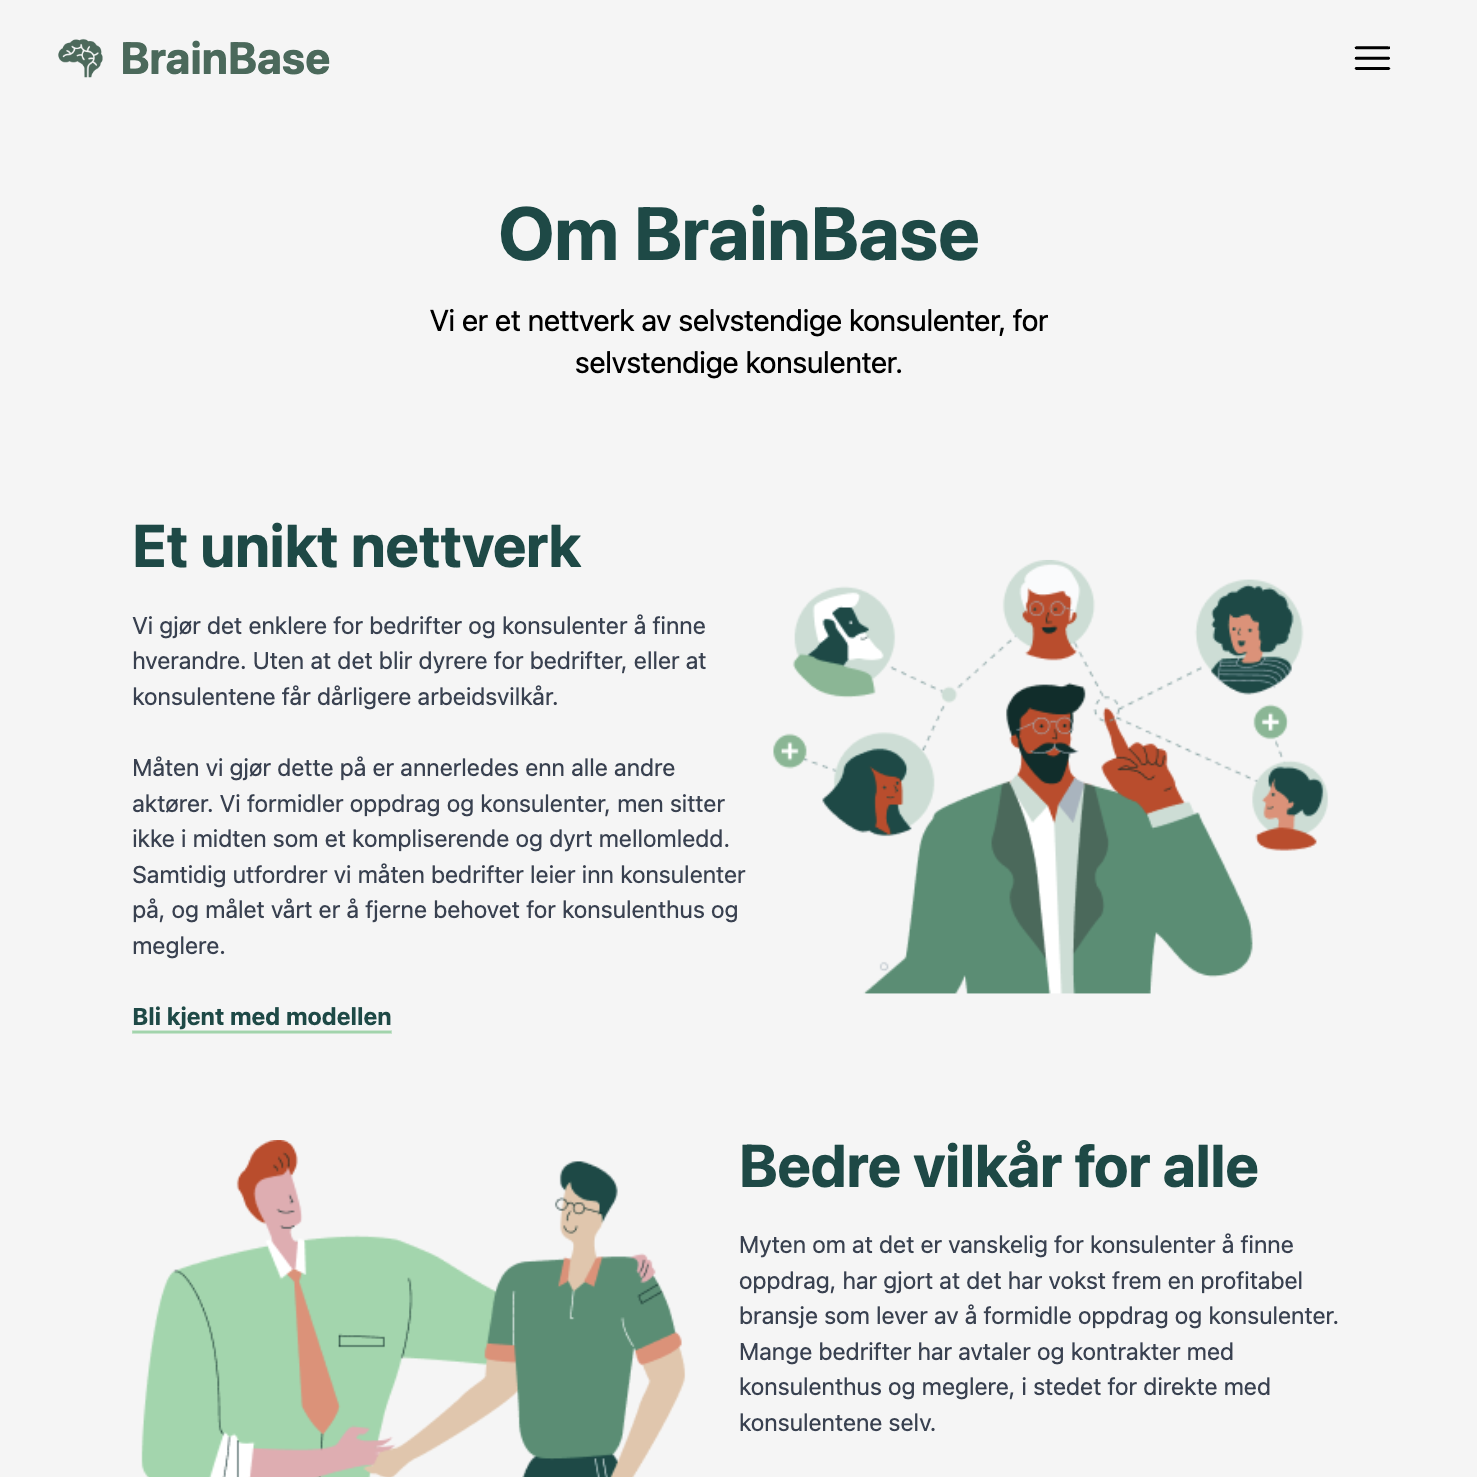 BrainBase co-founder